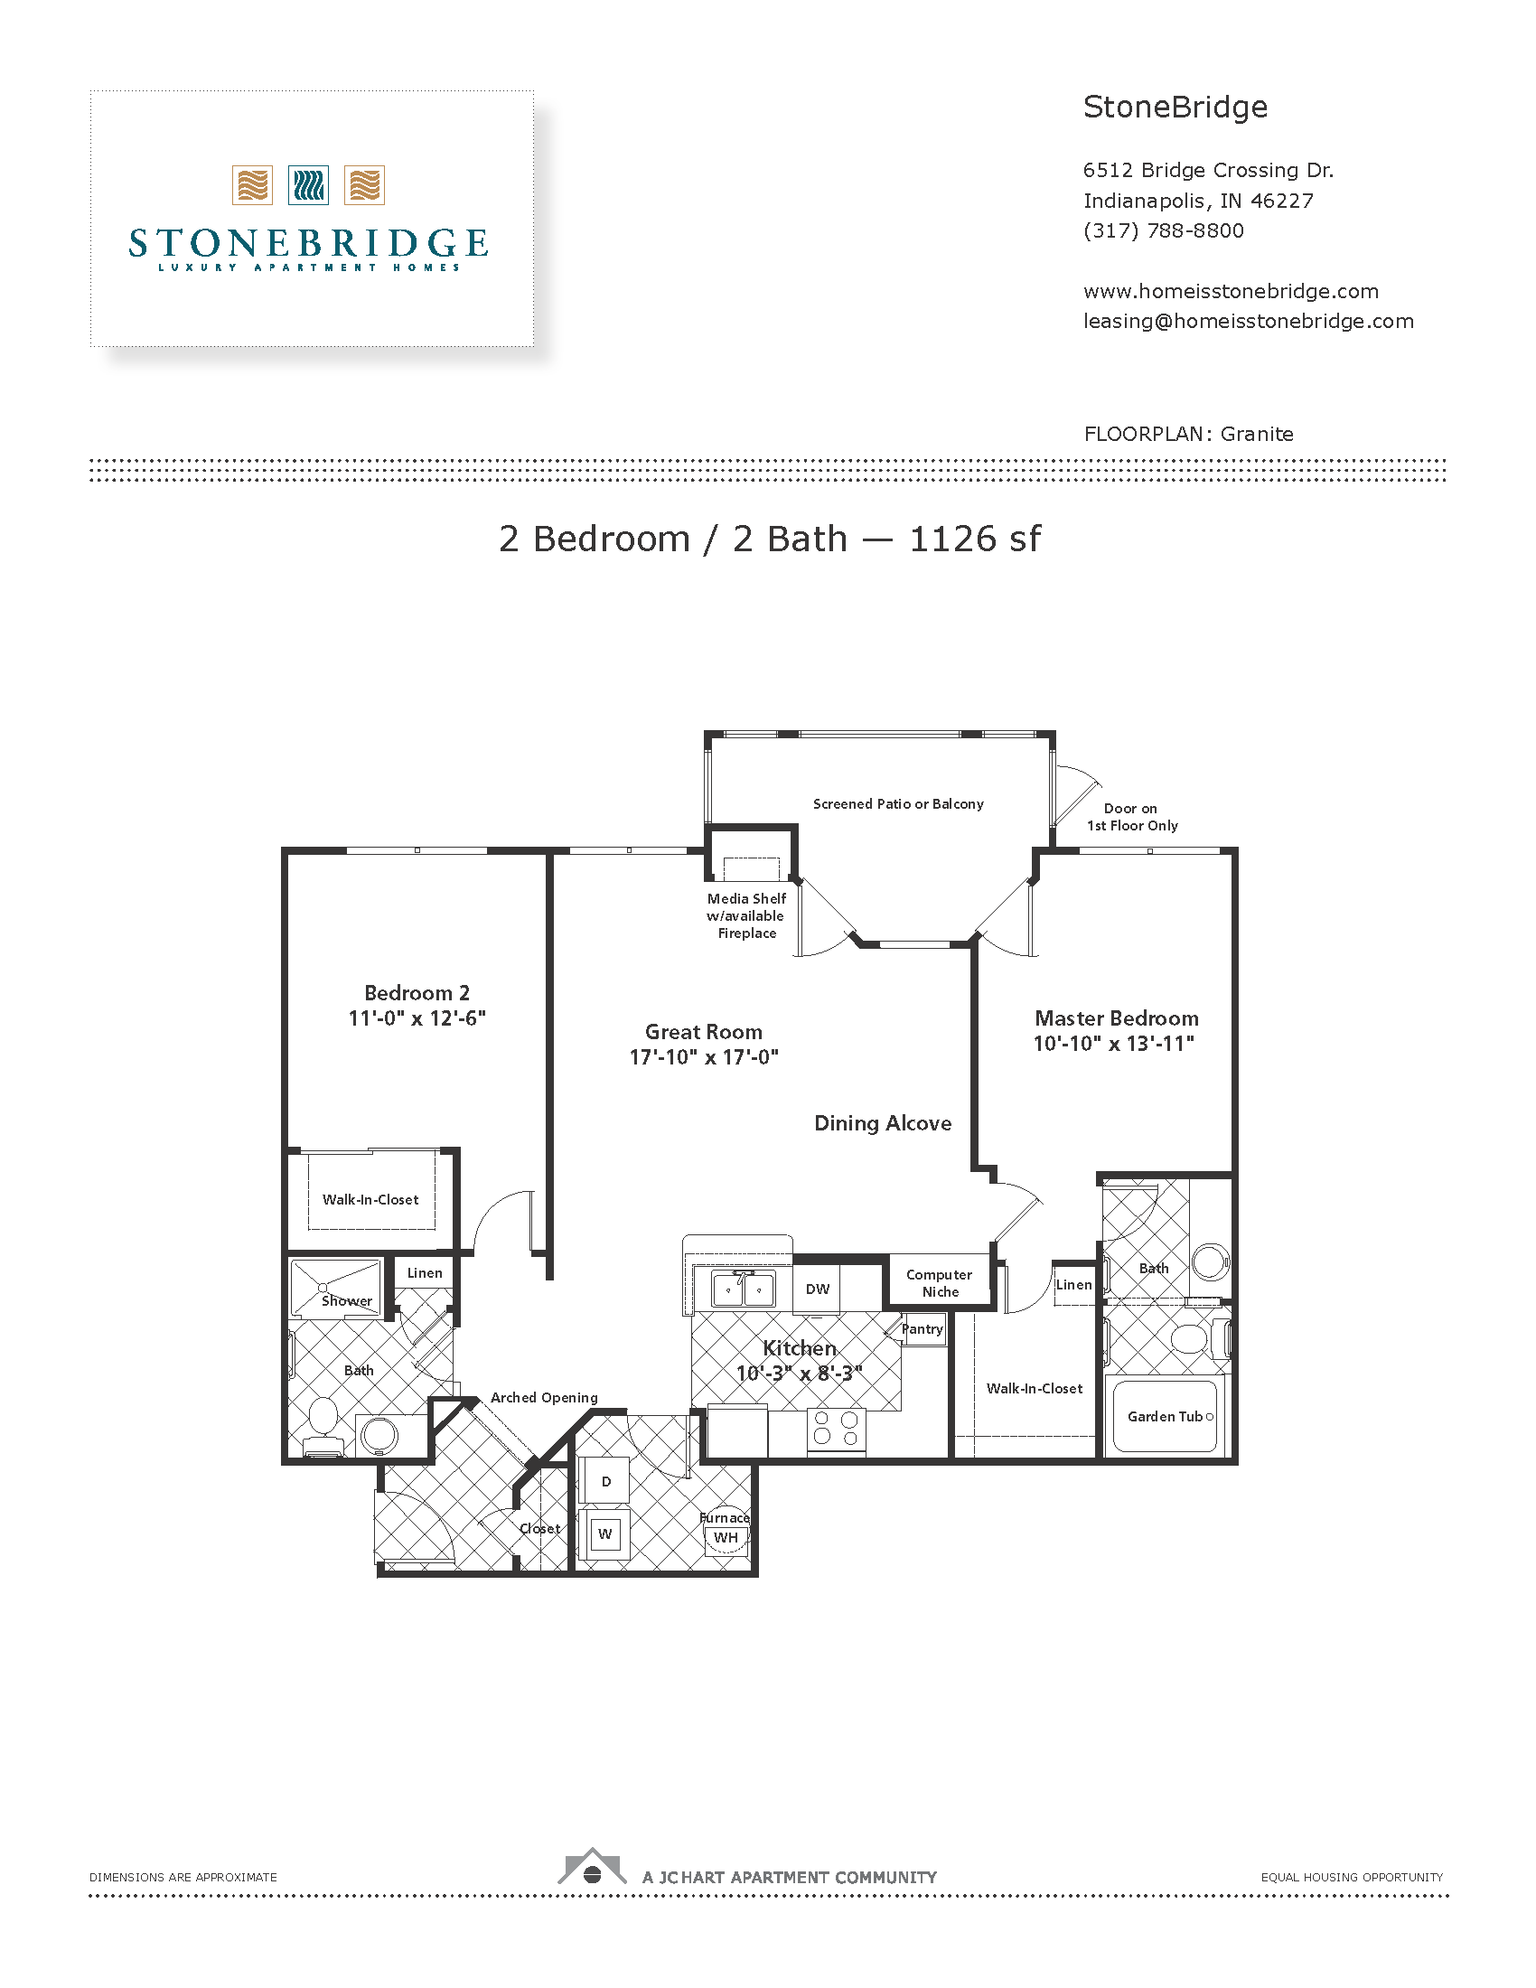 Granite floor plan - StoneBridge Apartment Homes _ Indianapolis apartments_preview.png